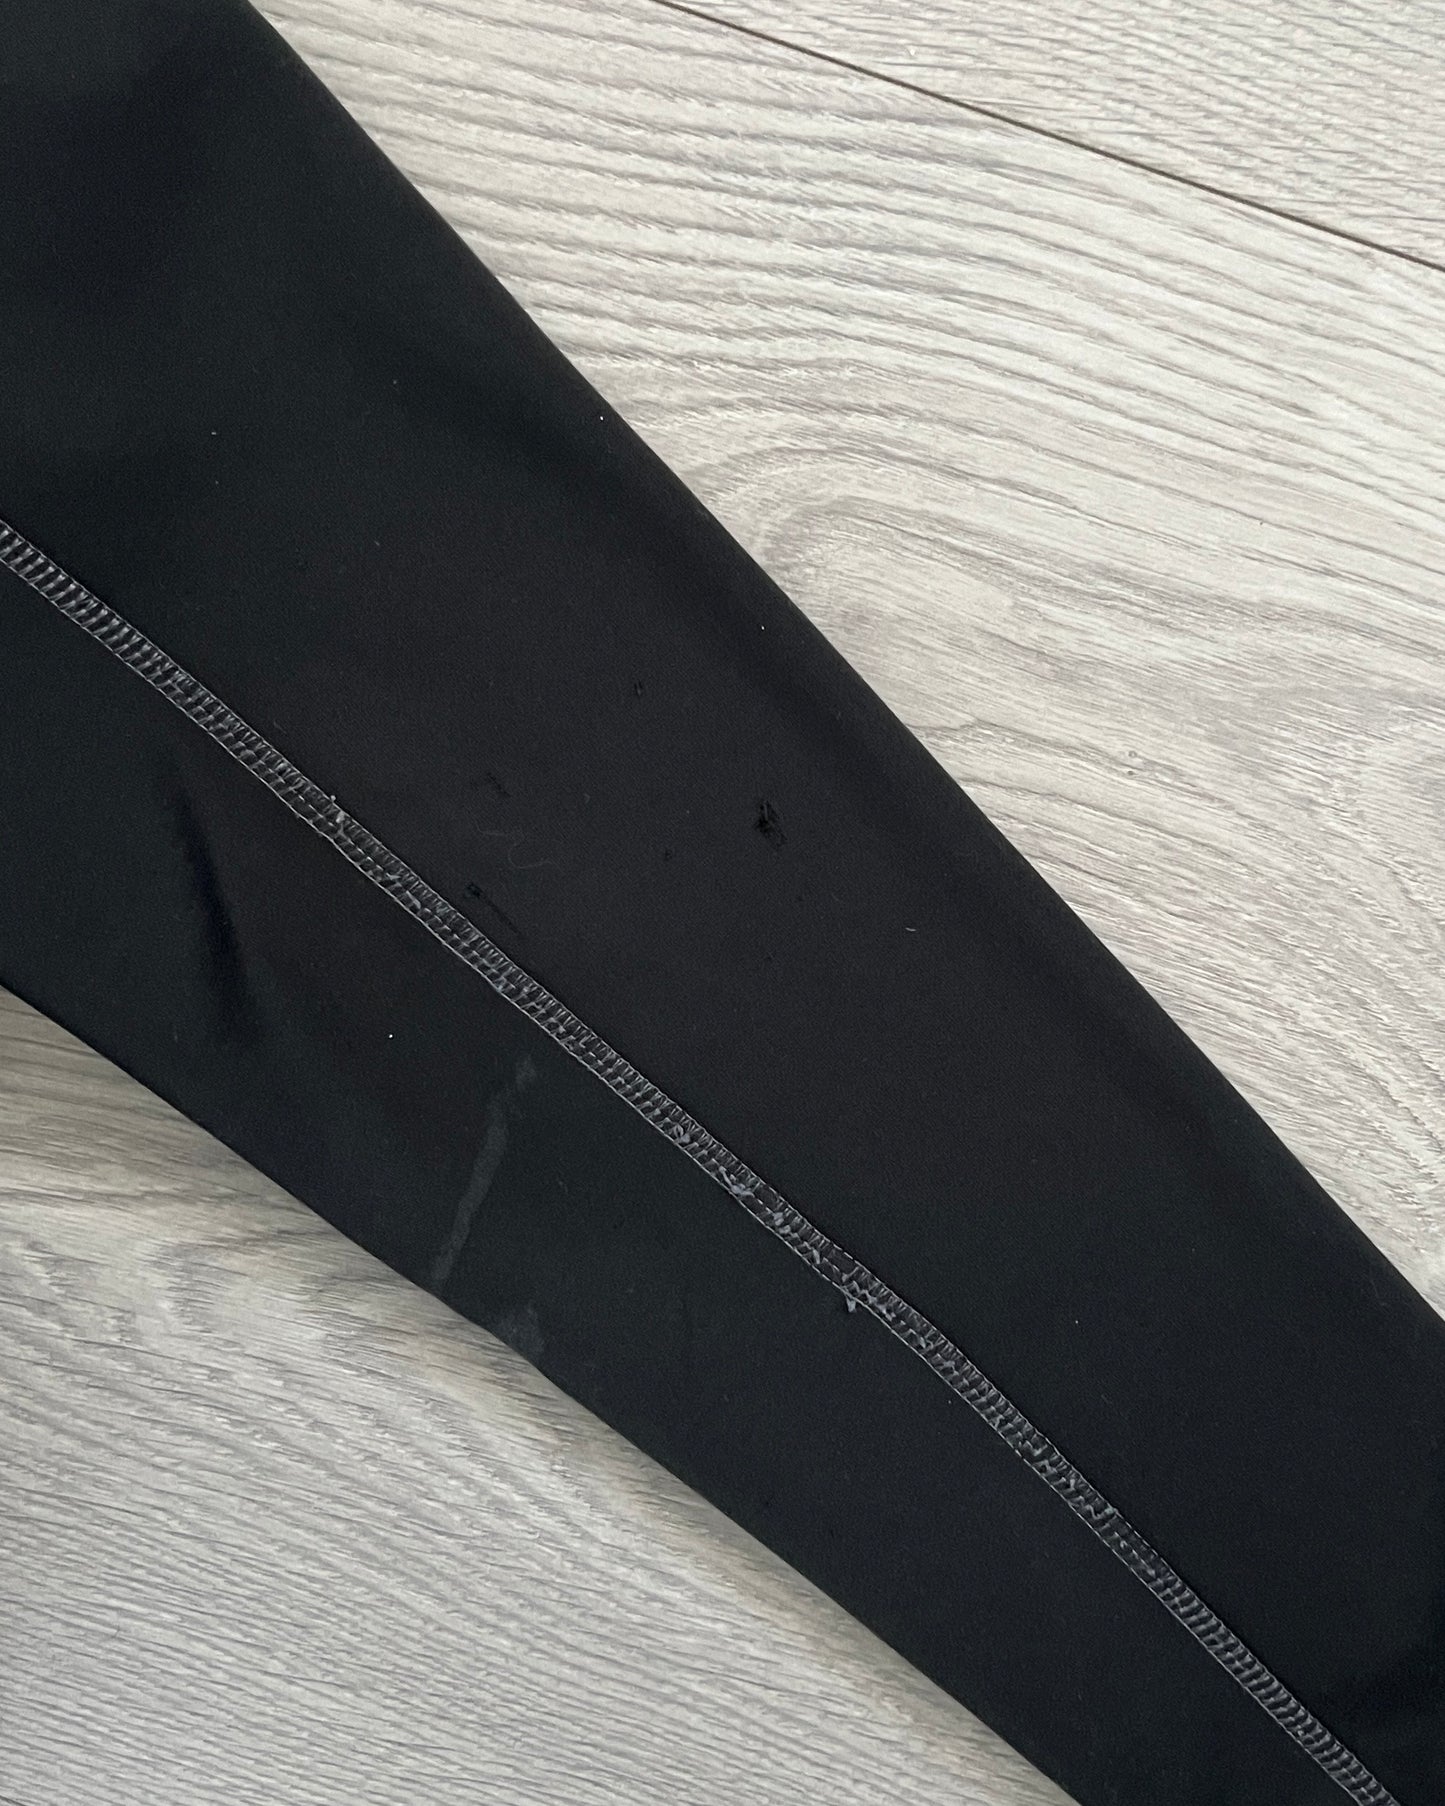 Salomon Contrast Stitch Technical Fleece Jacket - Size S